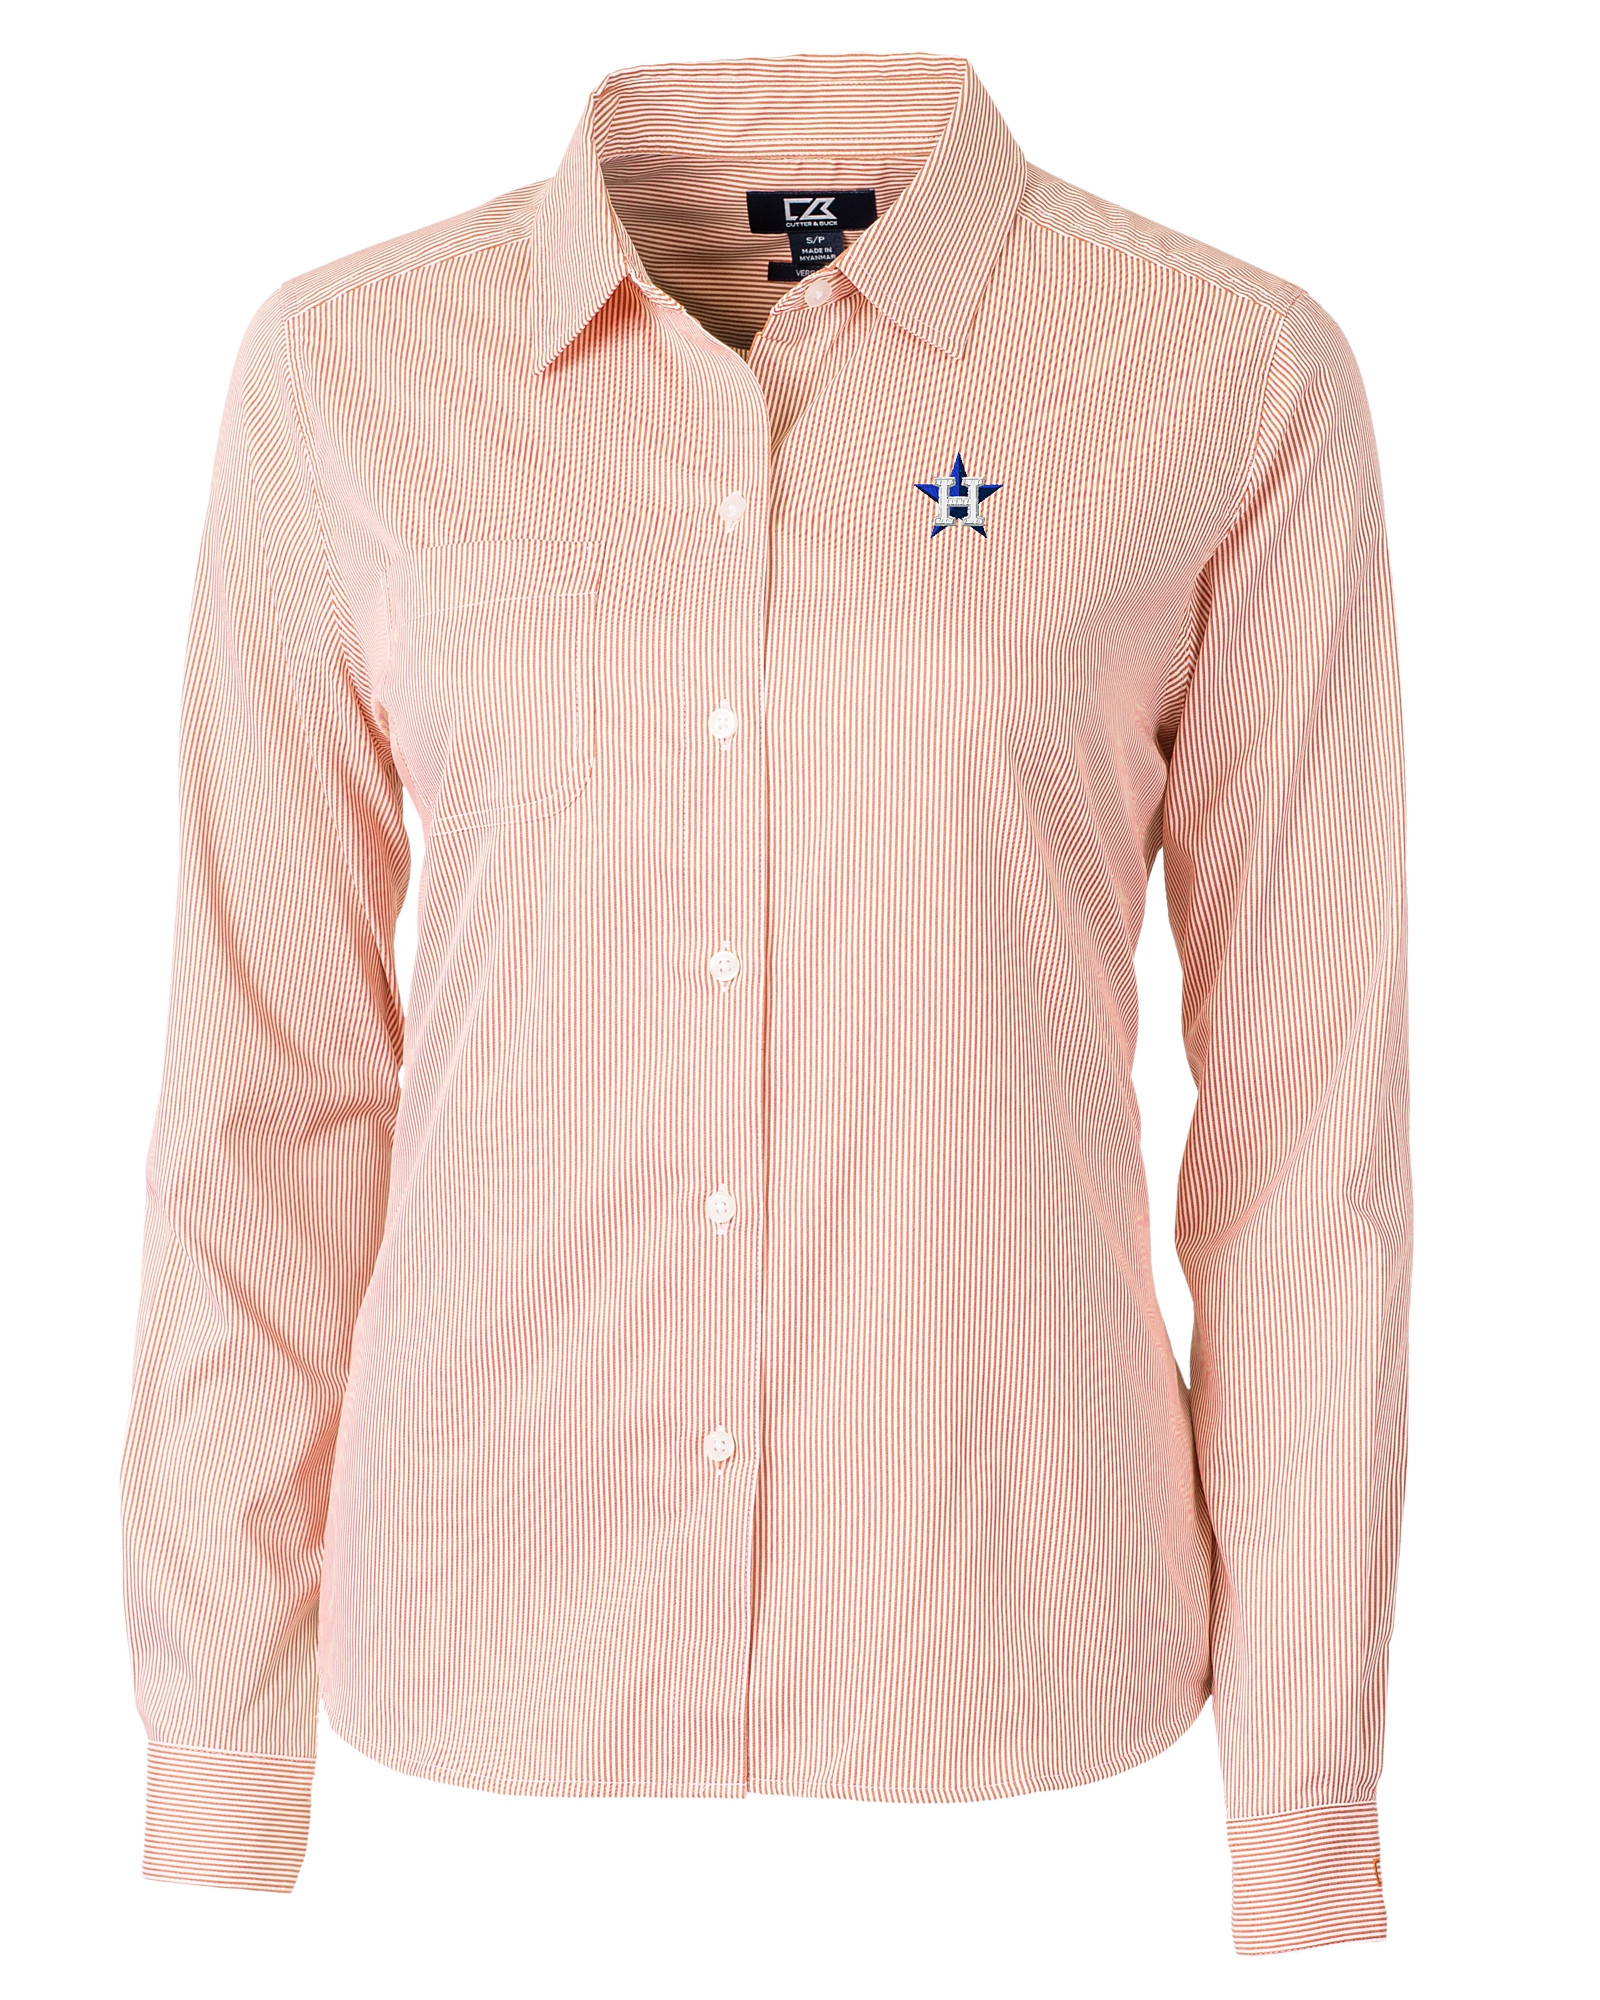 Pink Astros Shirt 